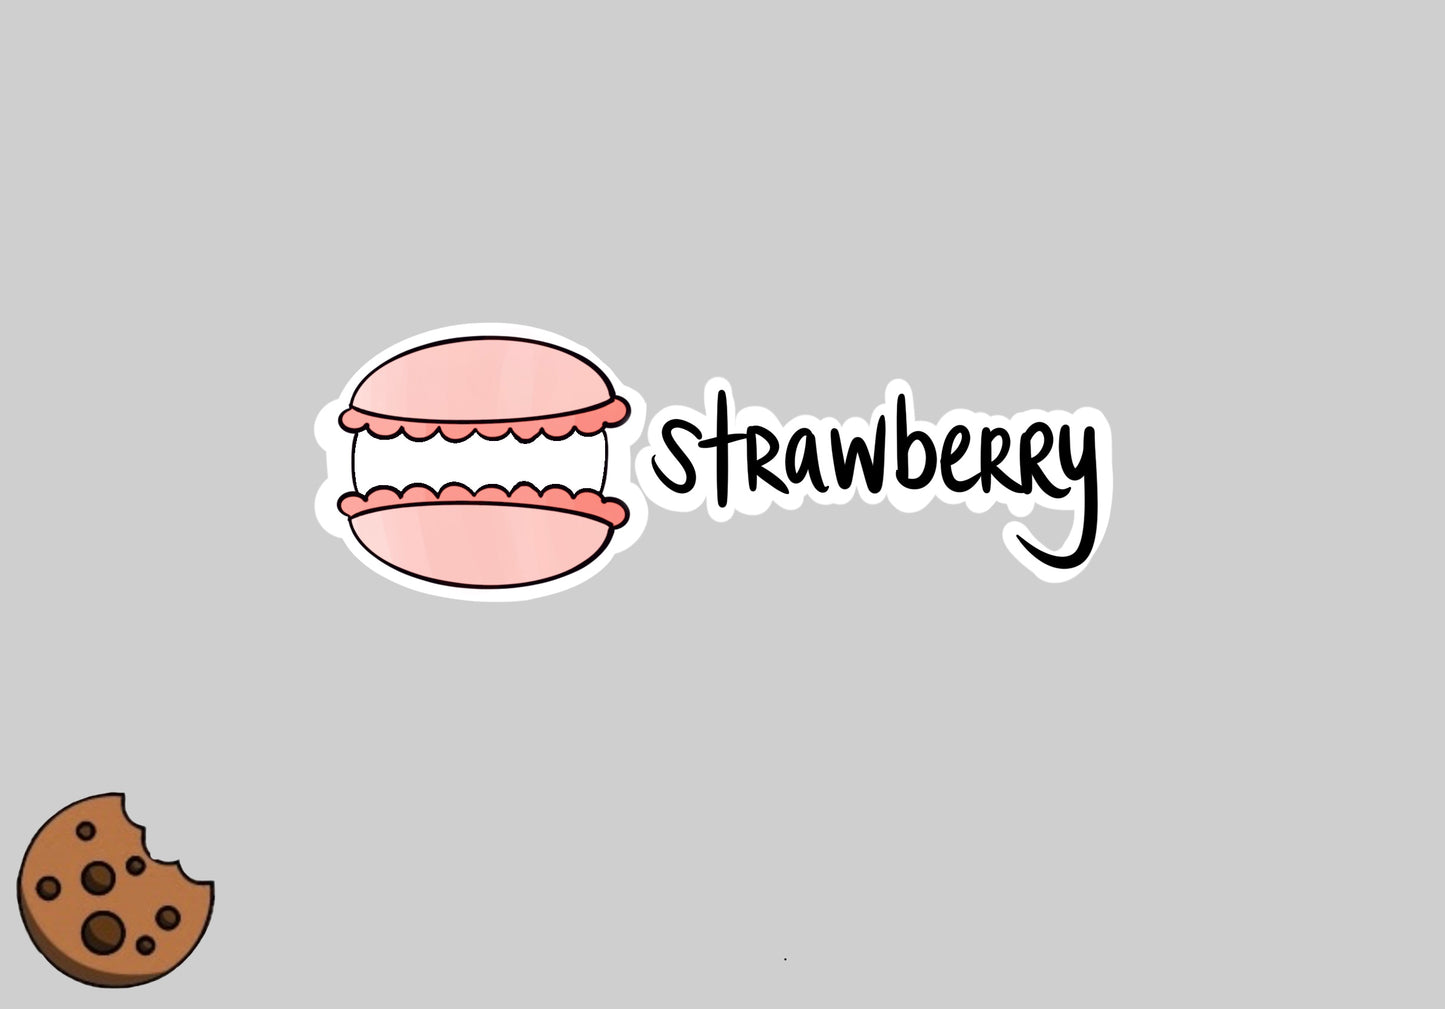 Strawberry Macaron (GF*)